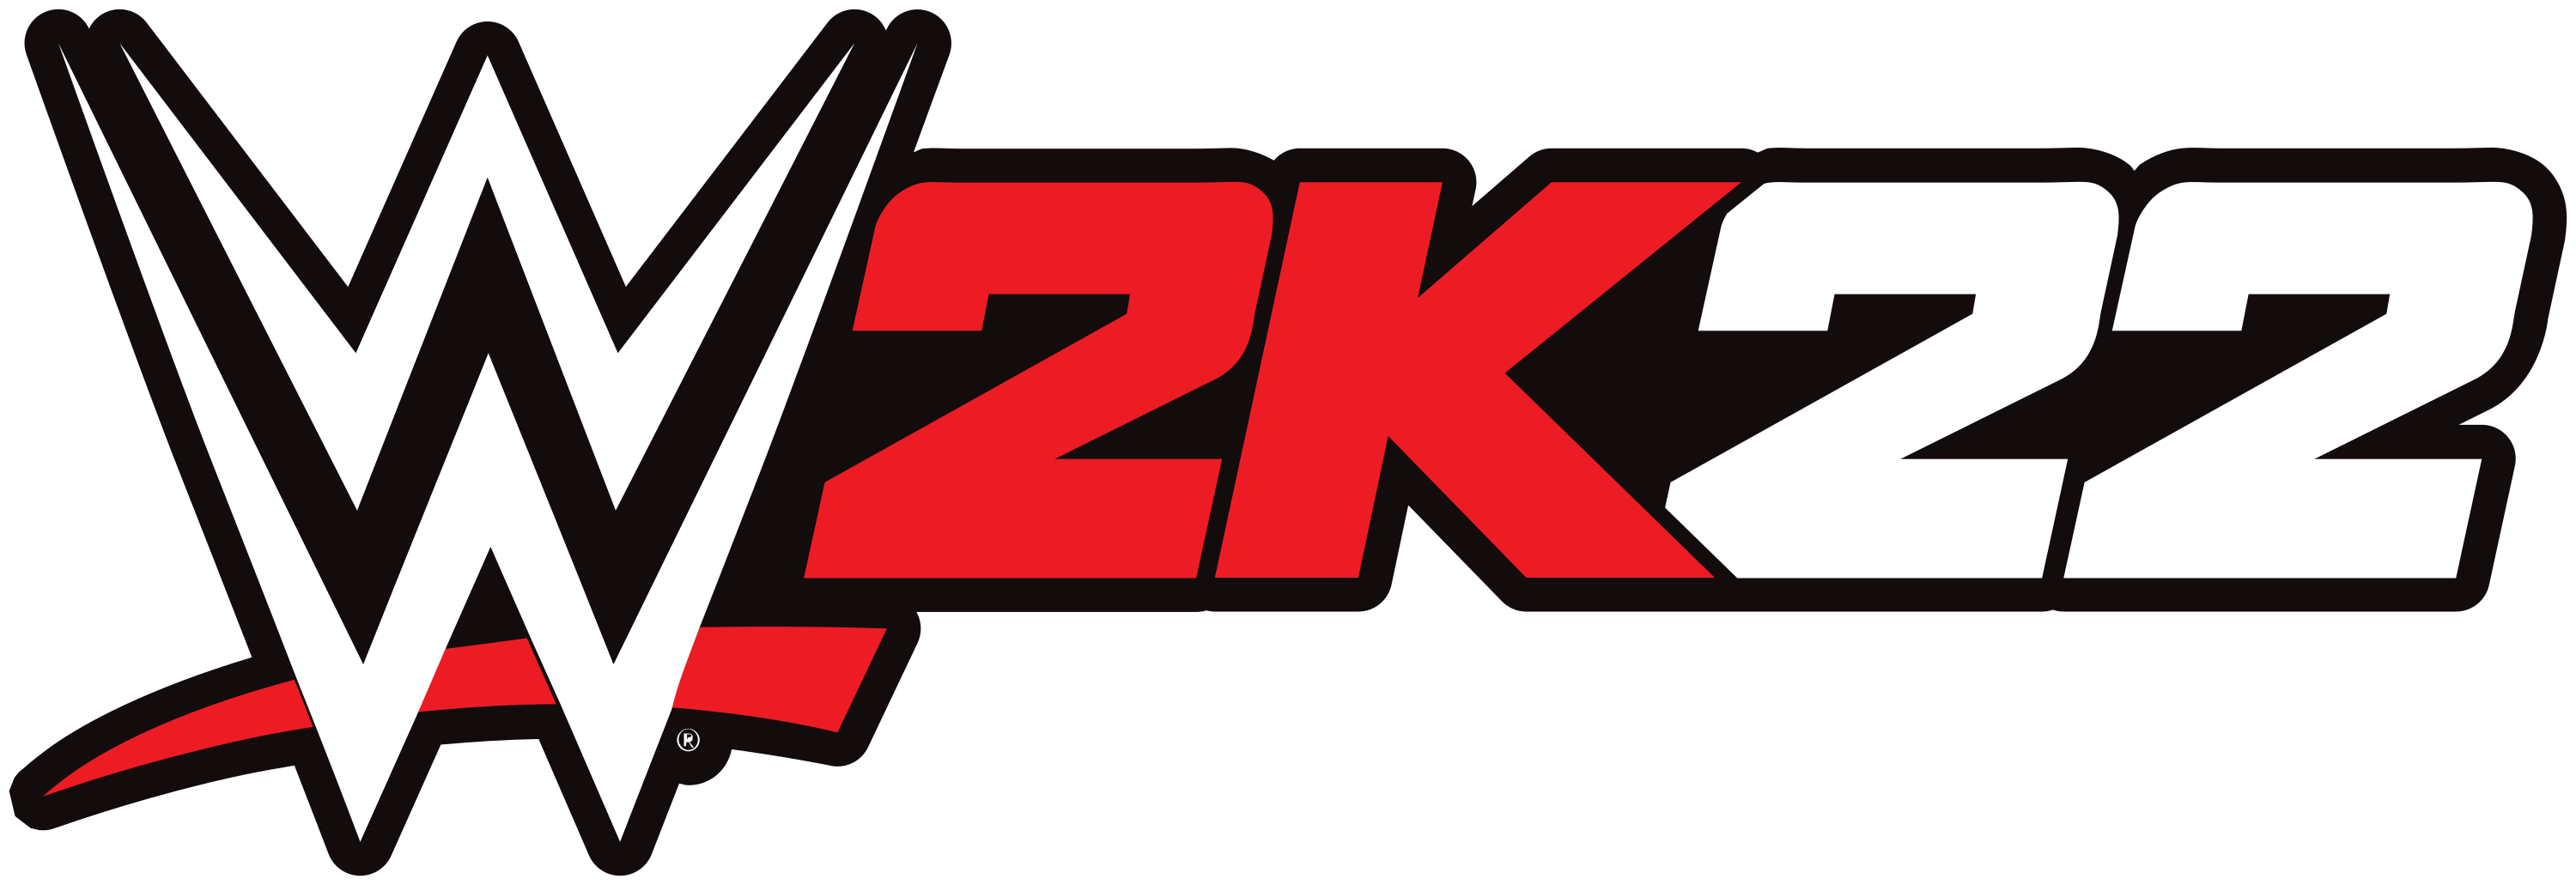 WWE 2K22 Logo by DarkVoidPictures in 2021